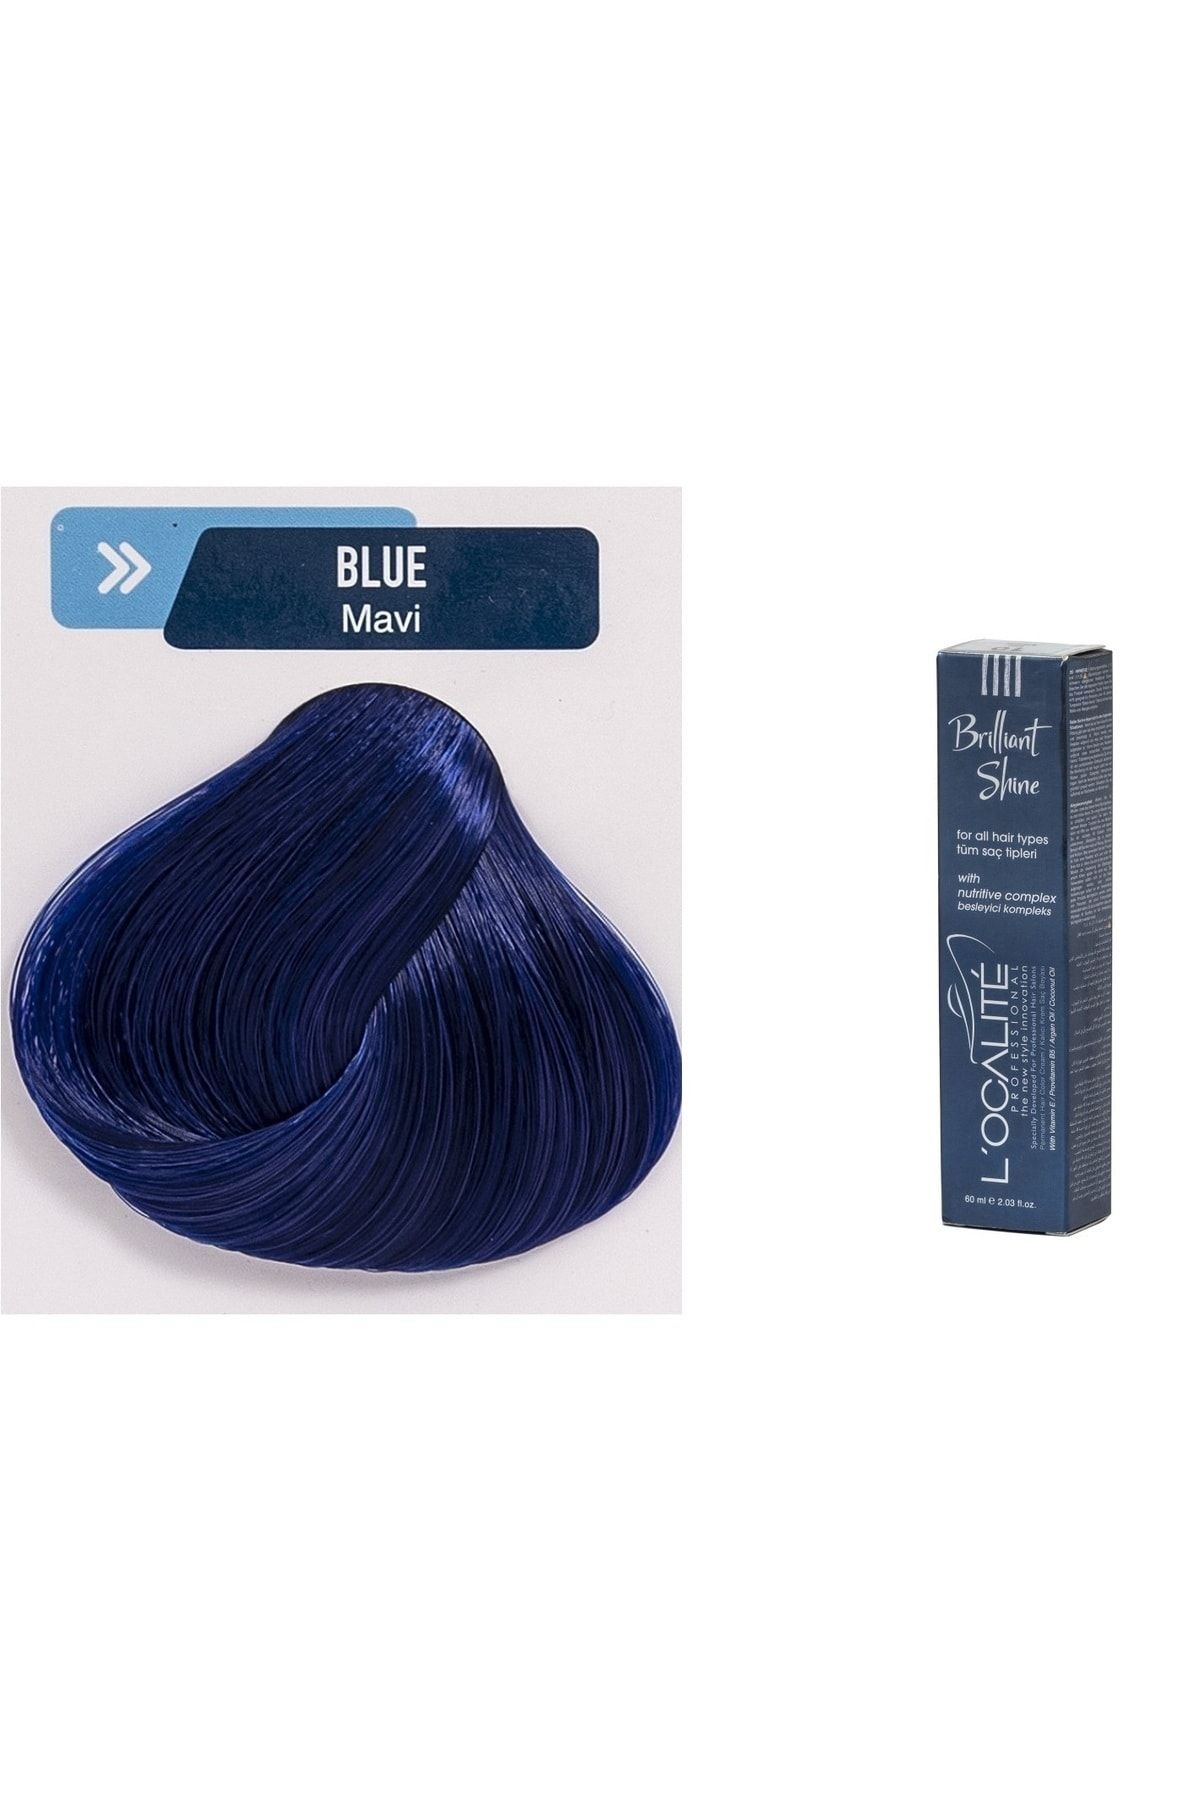 L'ocalite Saç Boyası 60ml Mavi 2 Adet